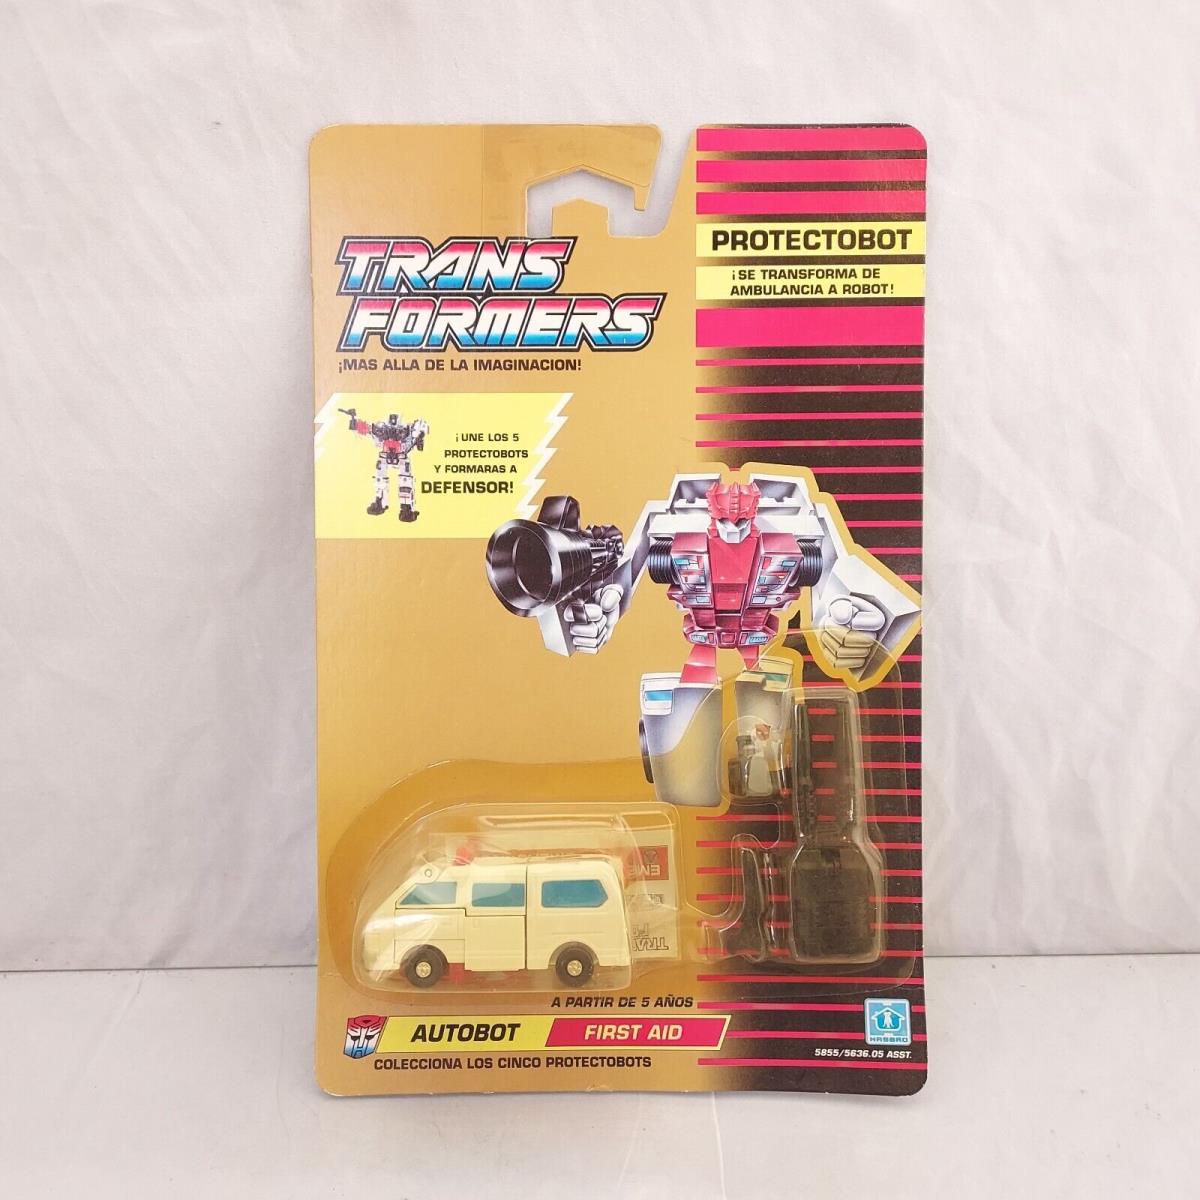 1990 Transformers G1 First Aid Car Ambulance Autobot Protectobot Defensor Hasbro